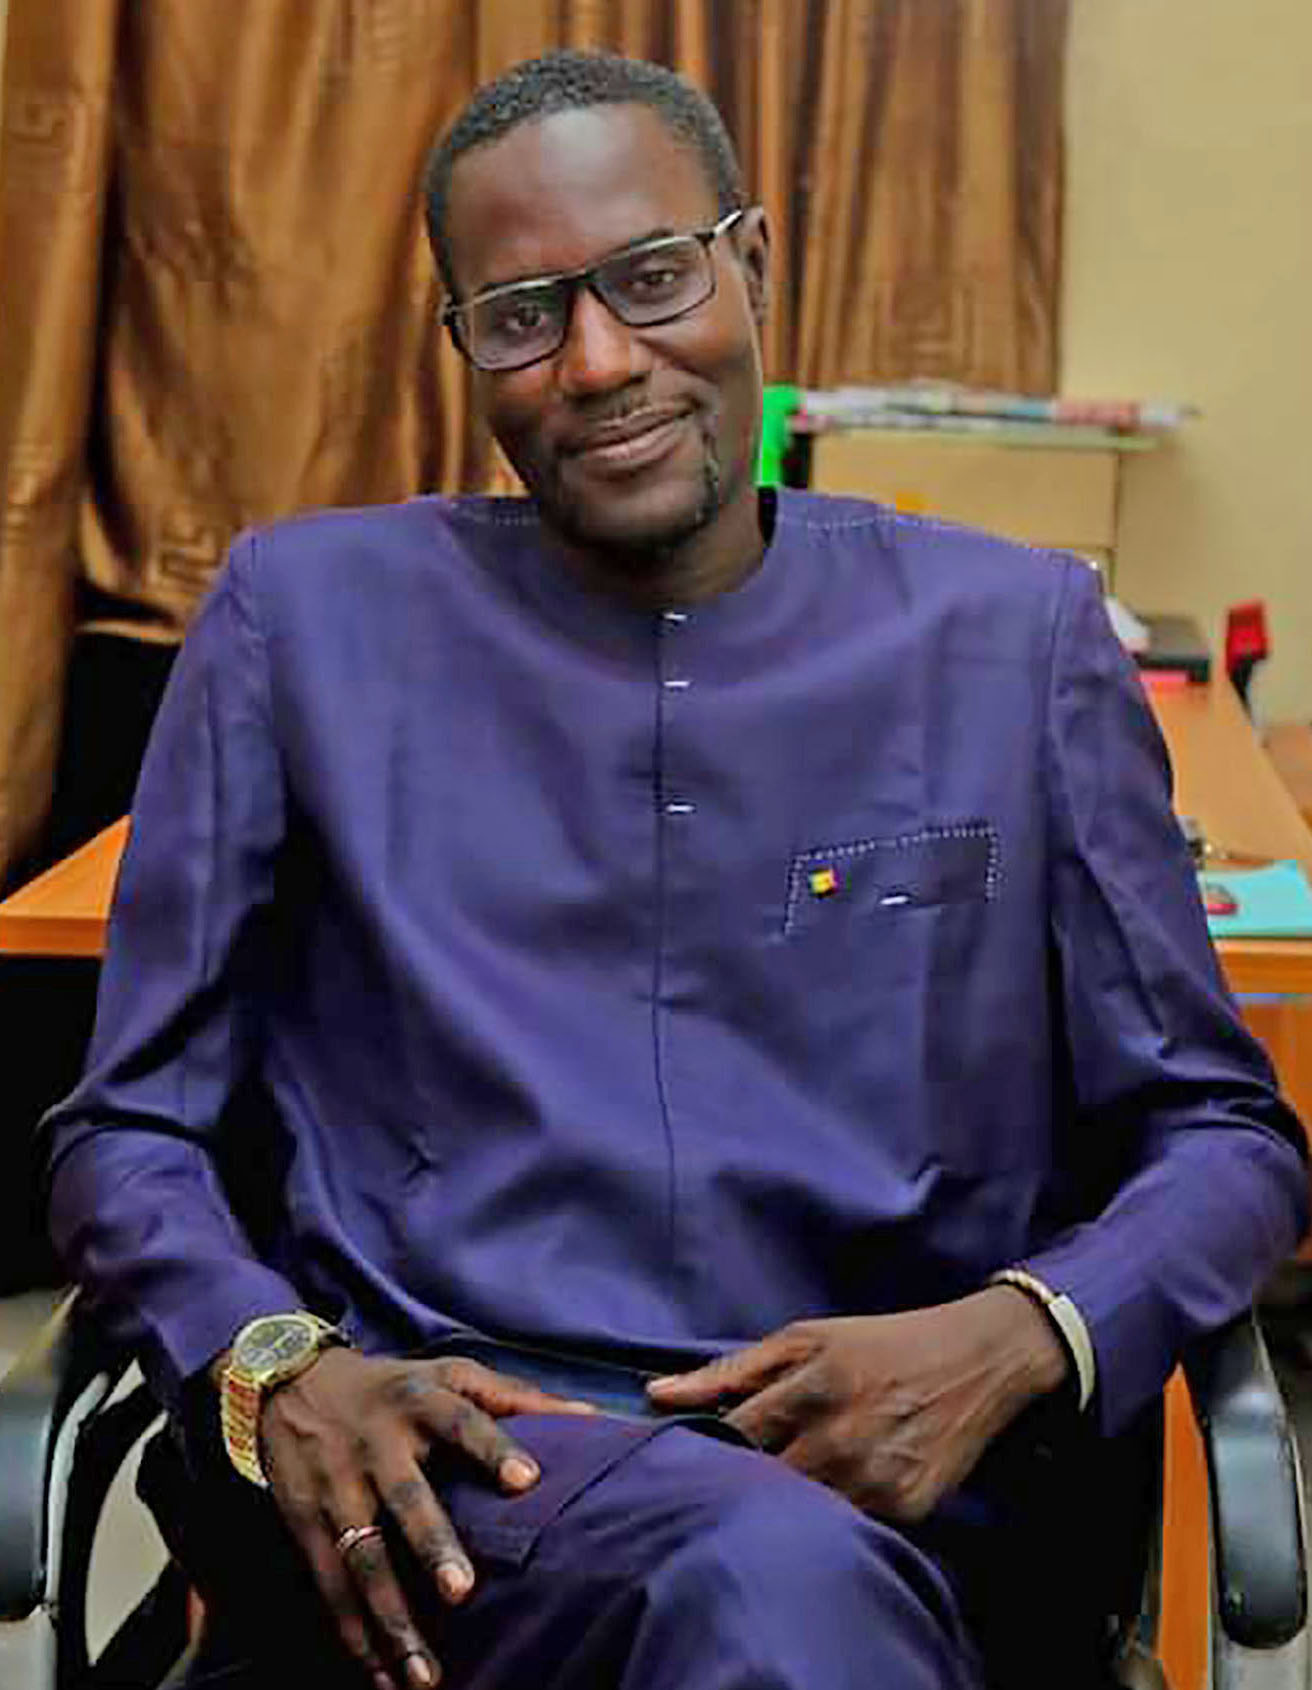 Ibrahima Benjamin Diagne